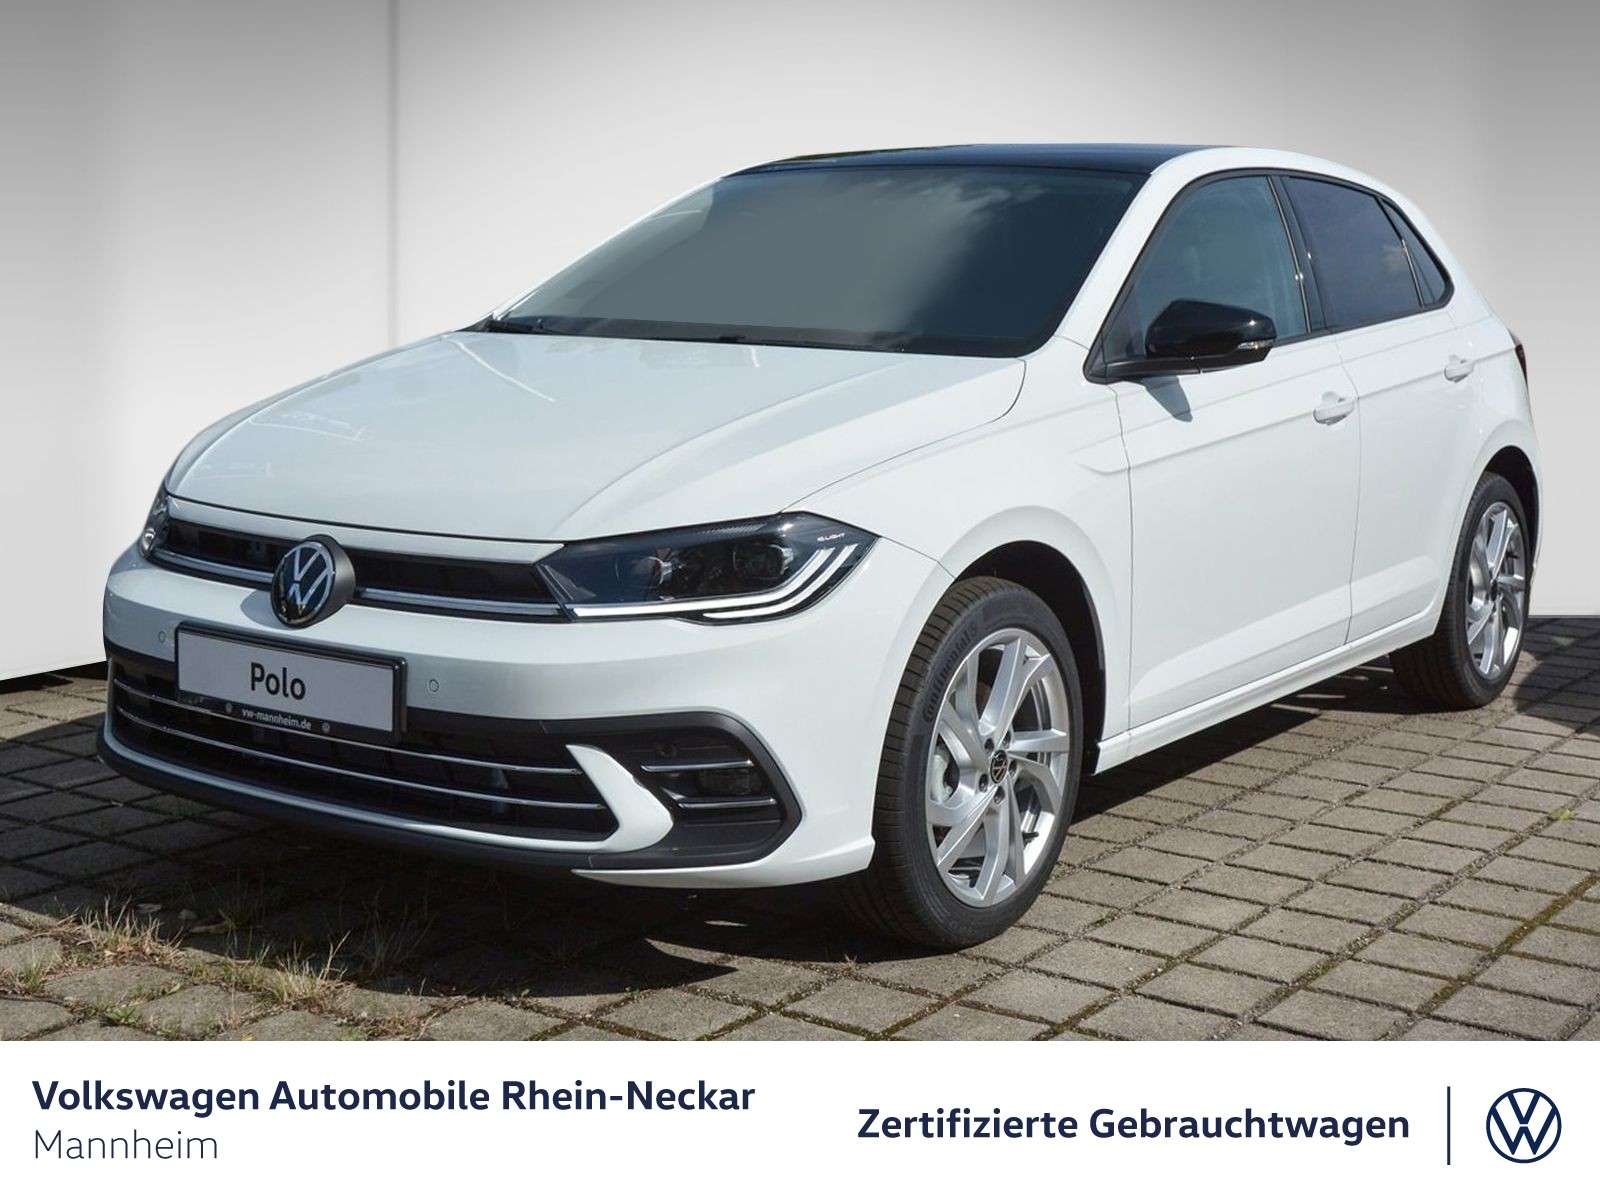 Volkswagen Polo Sedan in White used in Mannheim for € 26,991.-